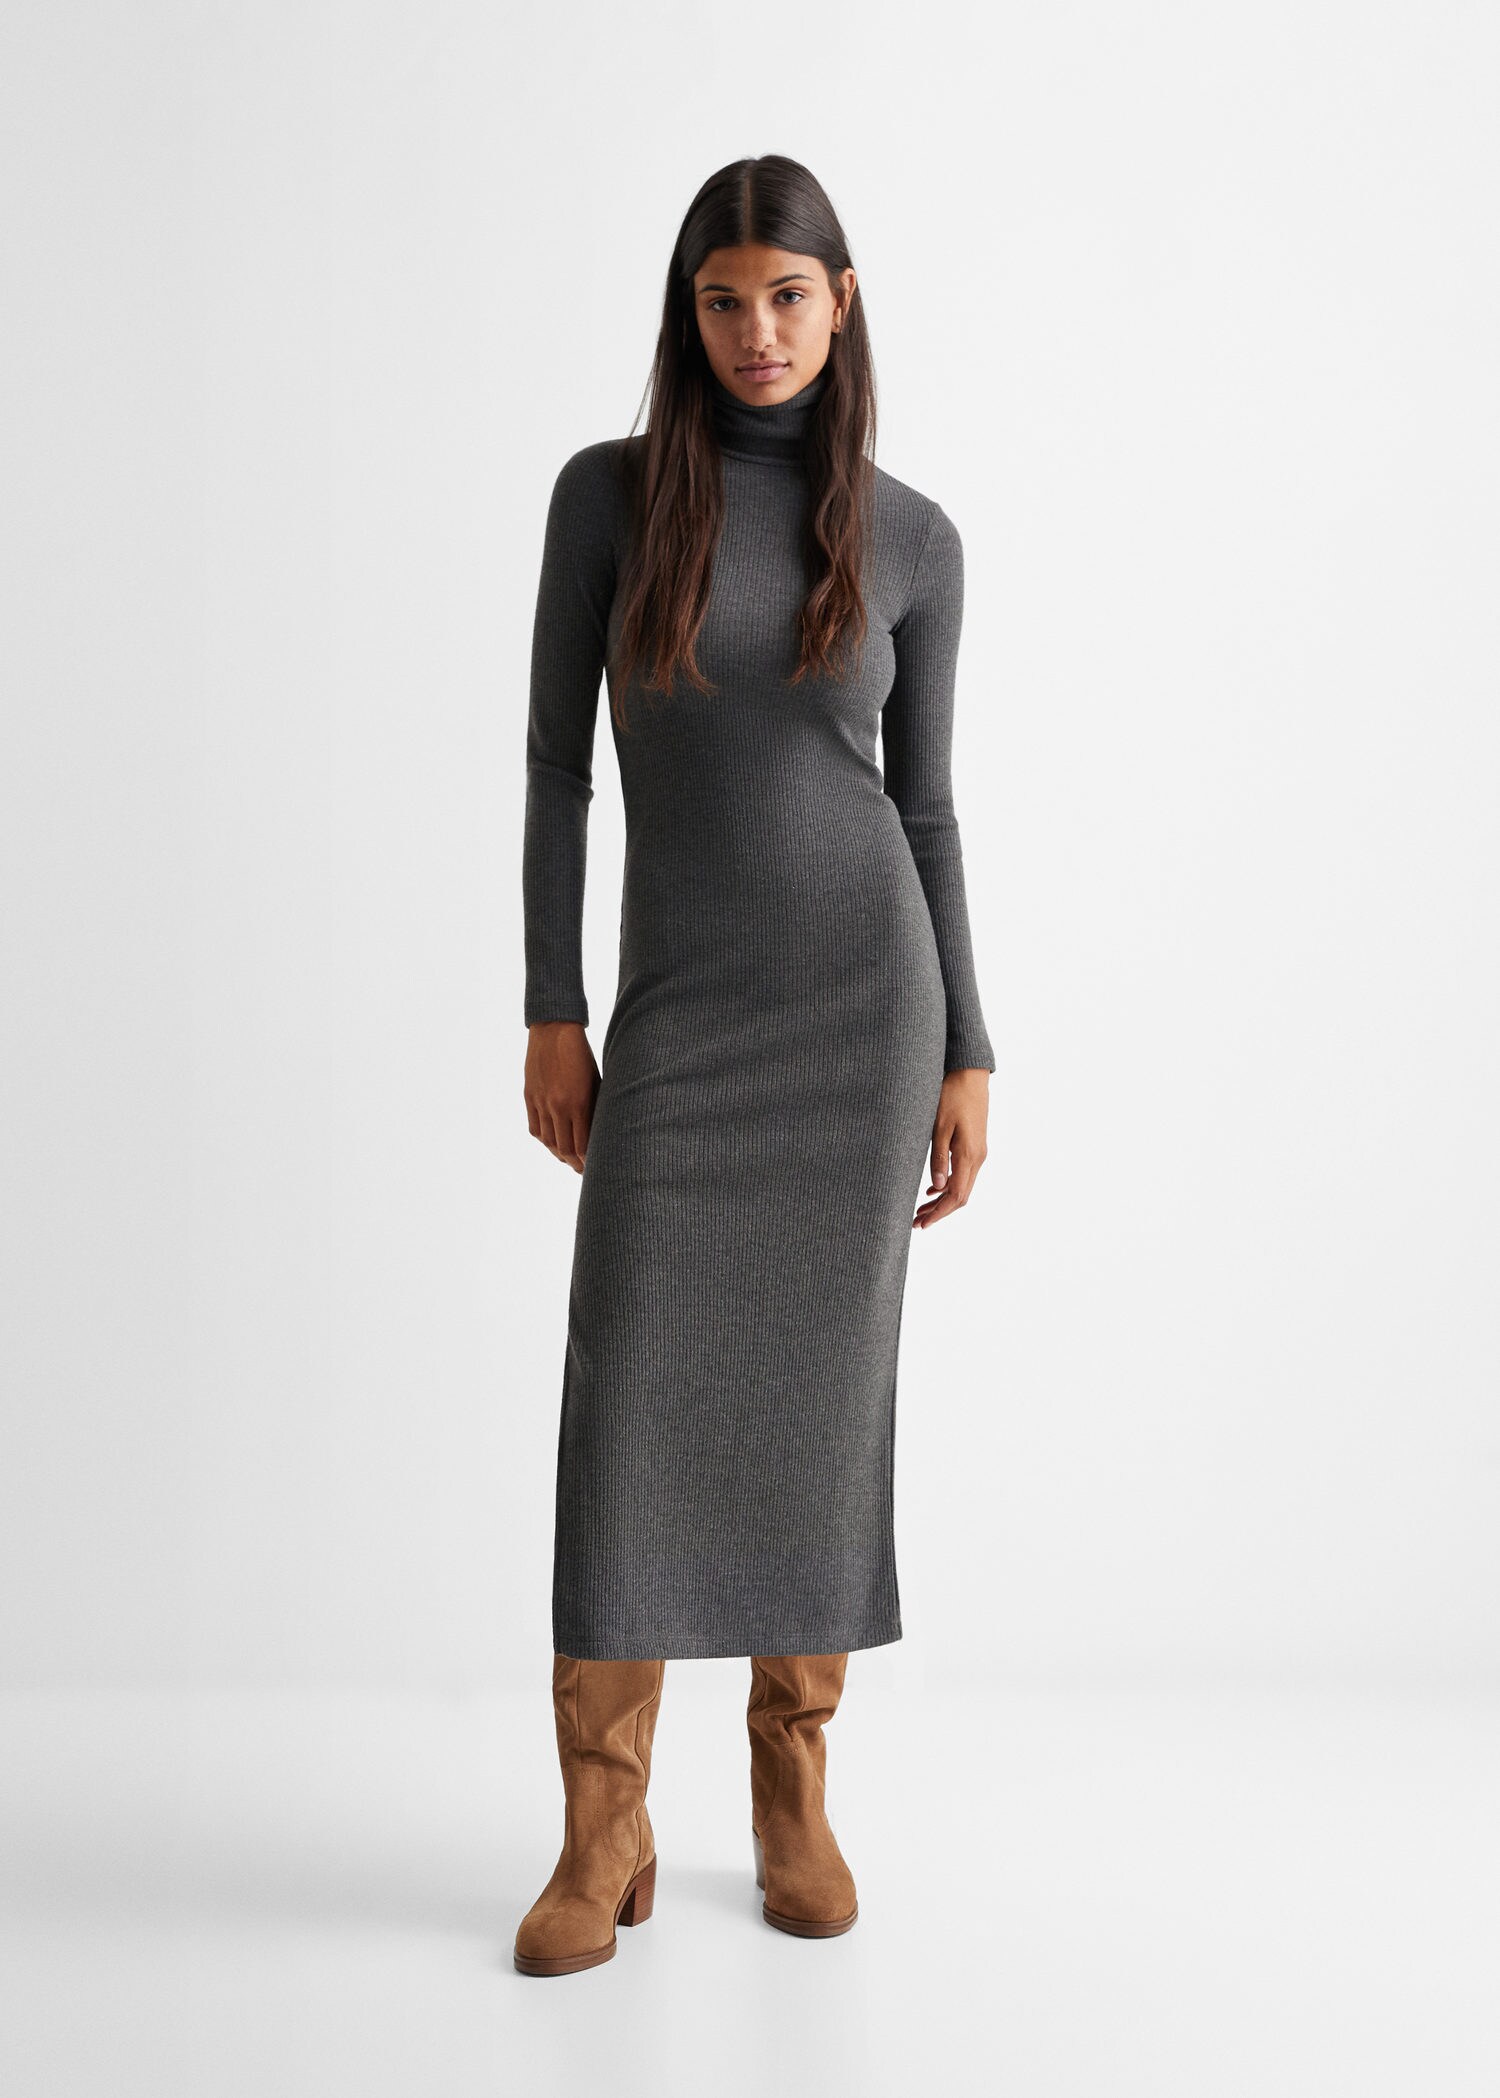 MANGO Dress - Buy Dresses from MANGO Online Store | Myntra